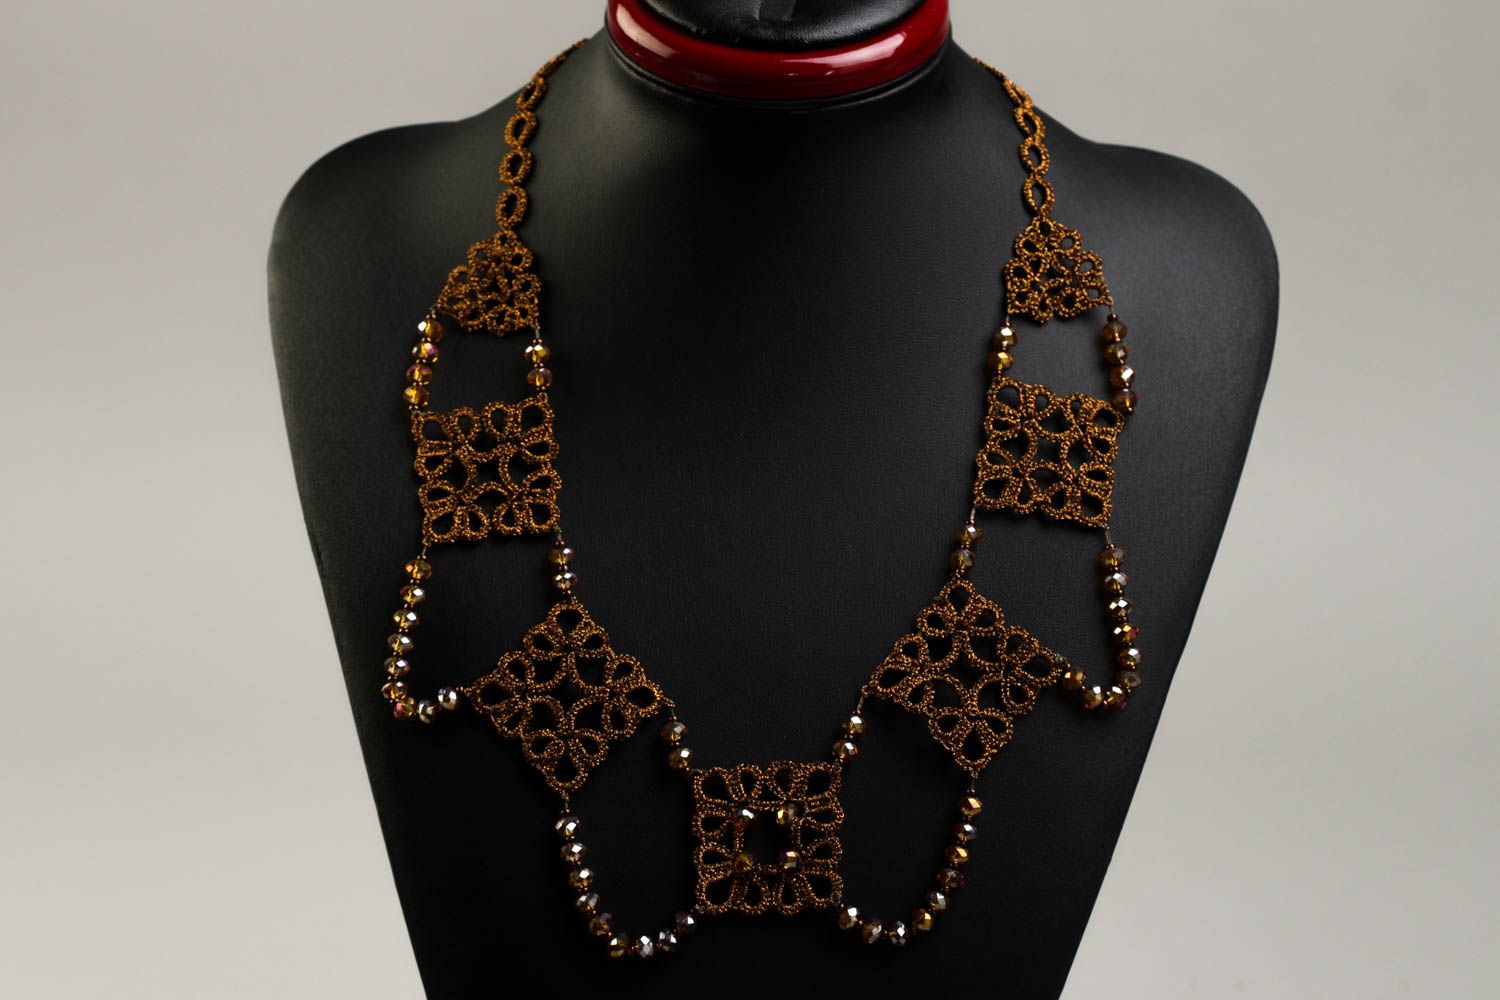 Unusual handmade textile necklace artisan jewelry designs neck accessories photo 1